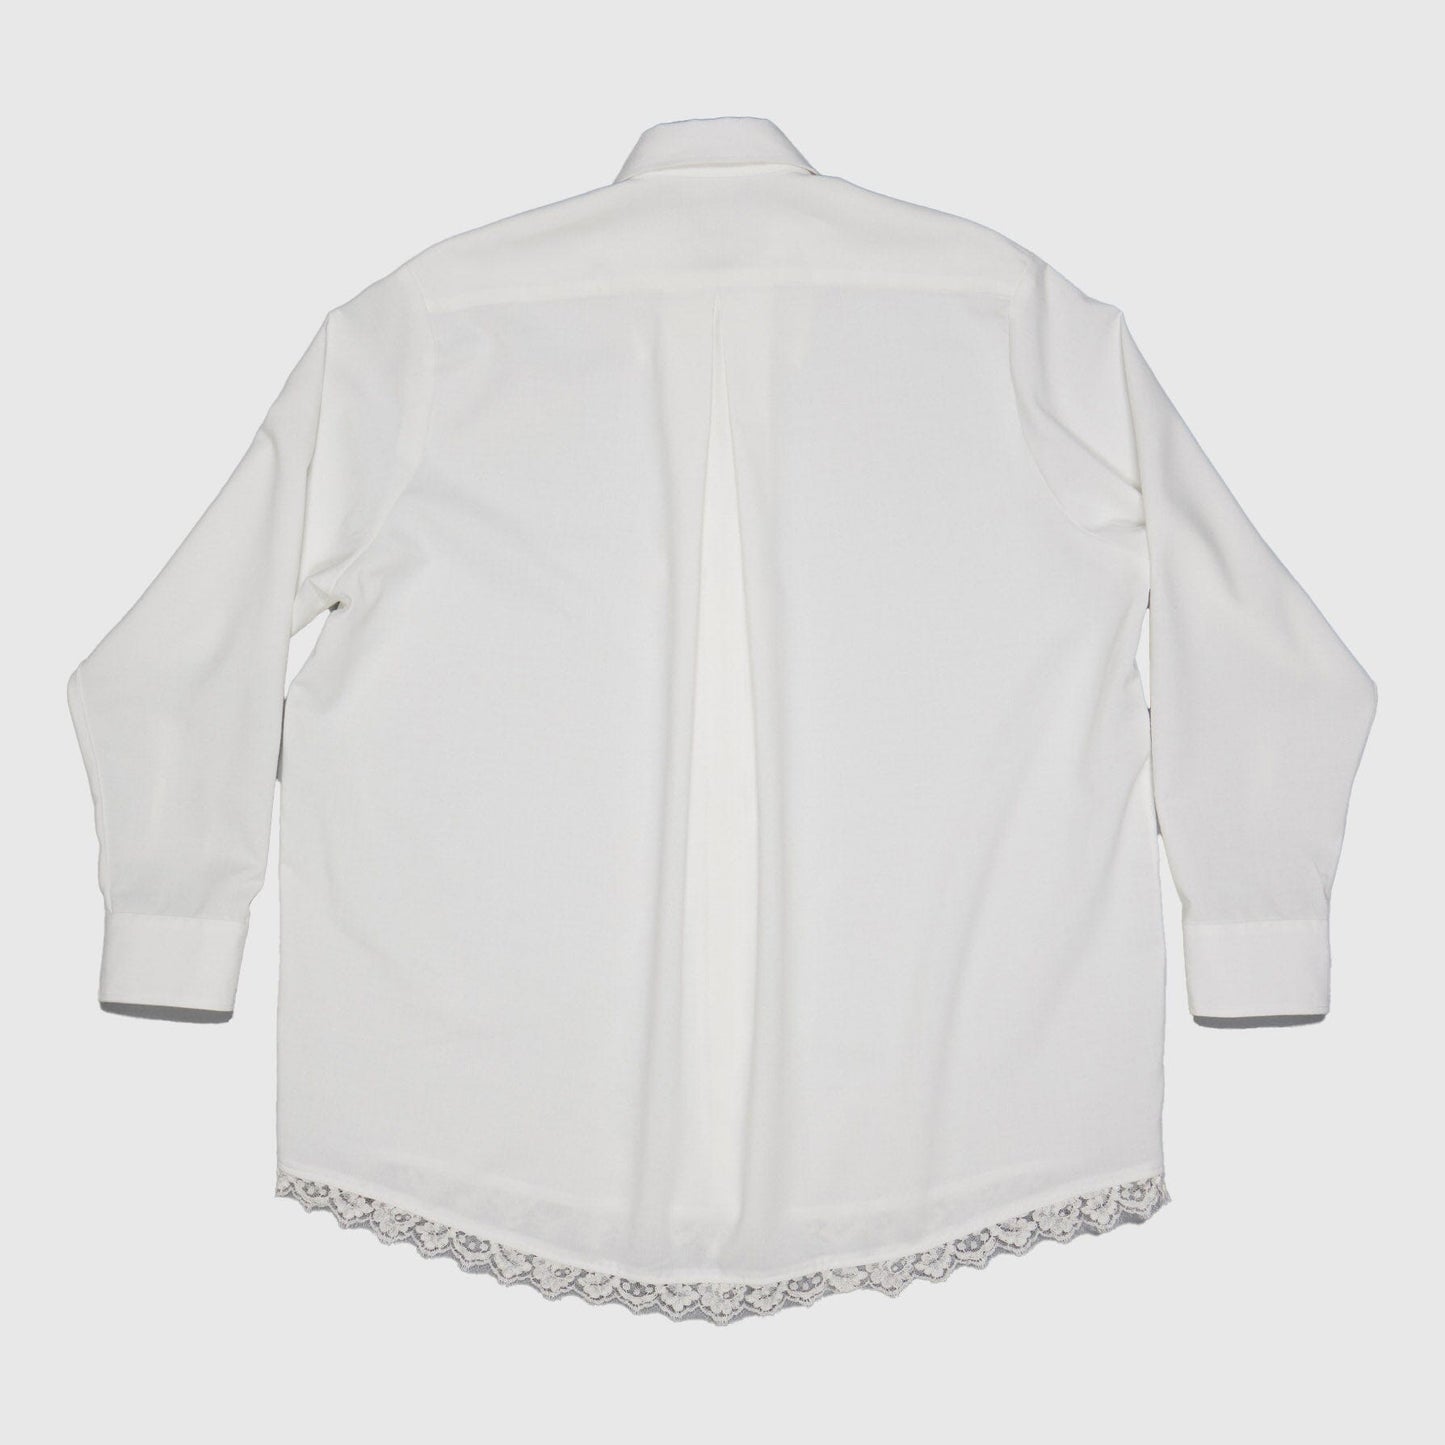 1313 SELAH Lace Shirt - White Shirt 1313 SELAH 